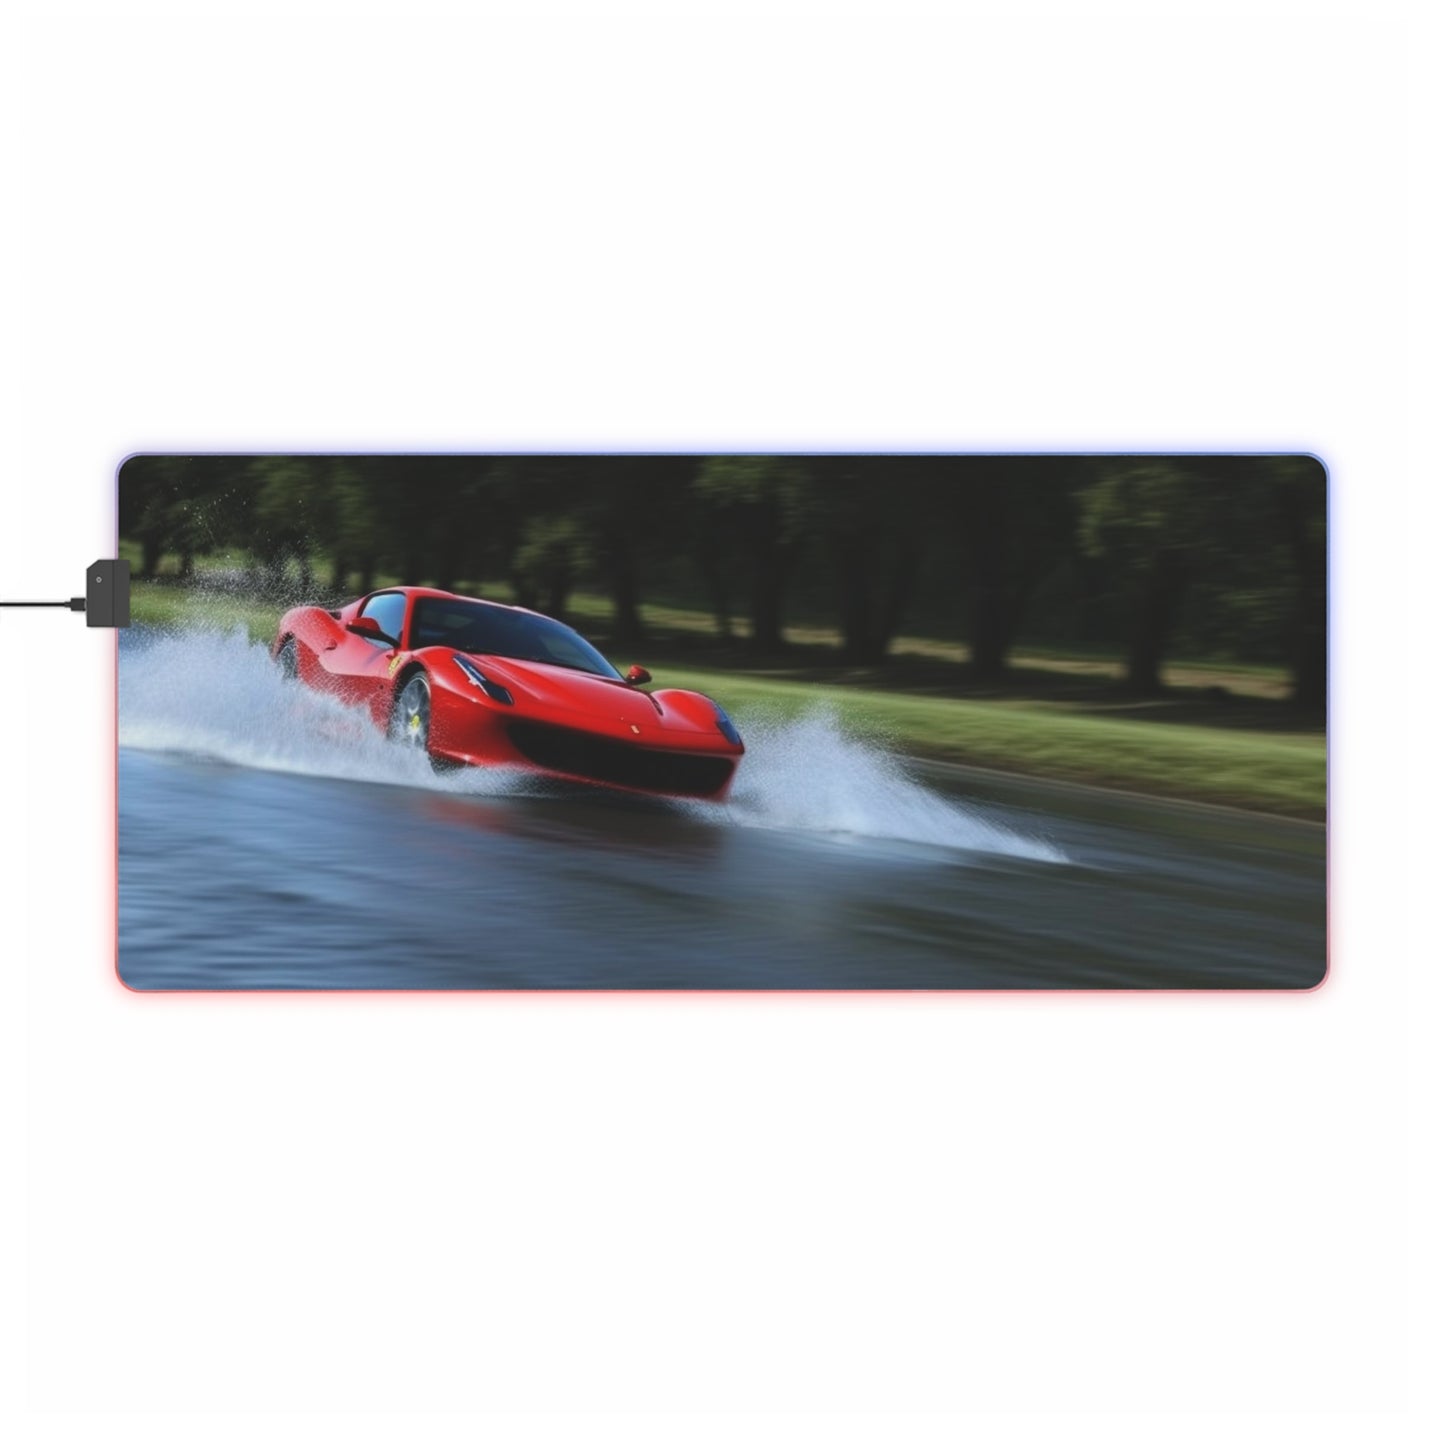 LED Gaming Mouse Pad Water Ferrari Splash 3